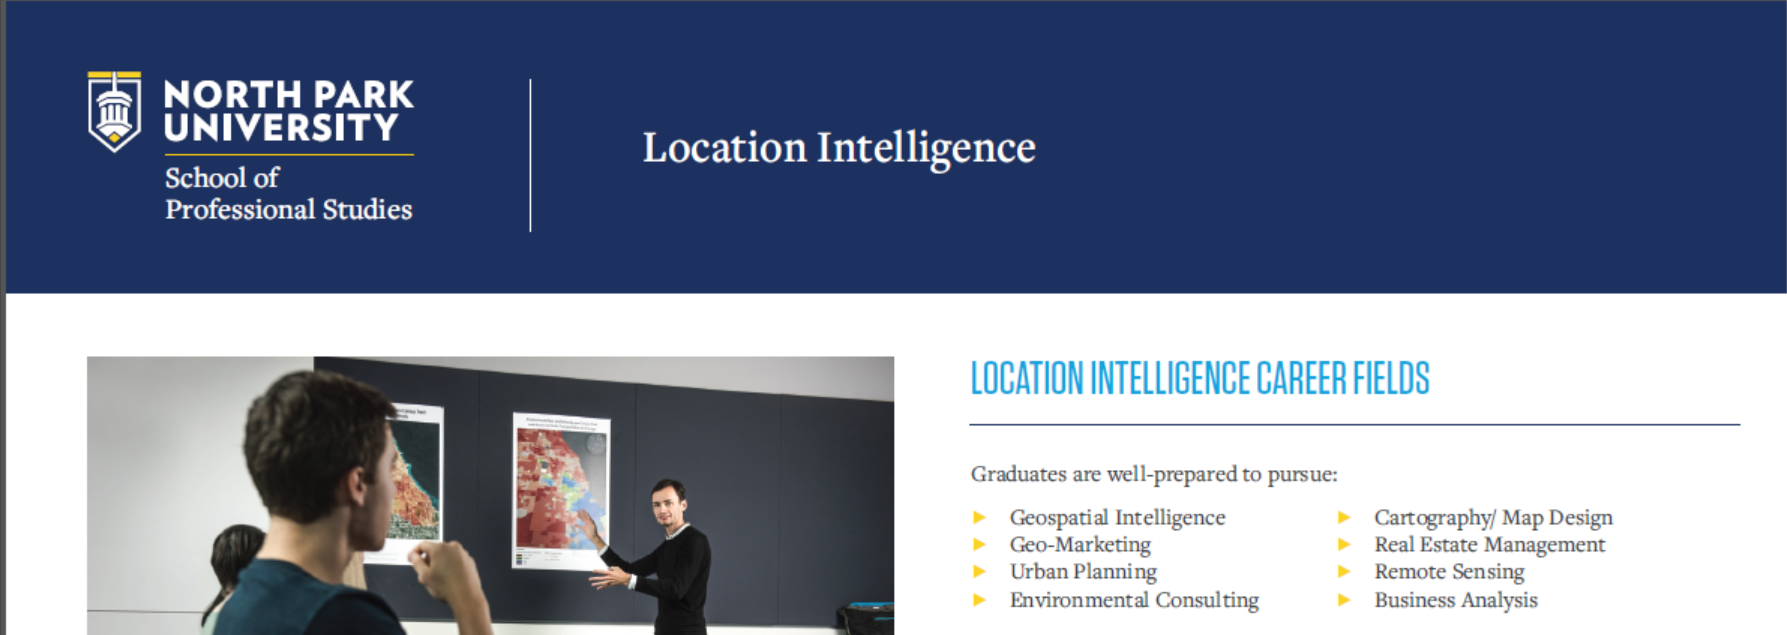 Location Intelligence Program at North Park University